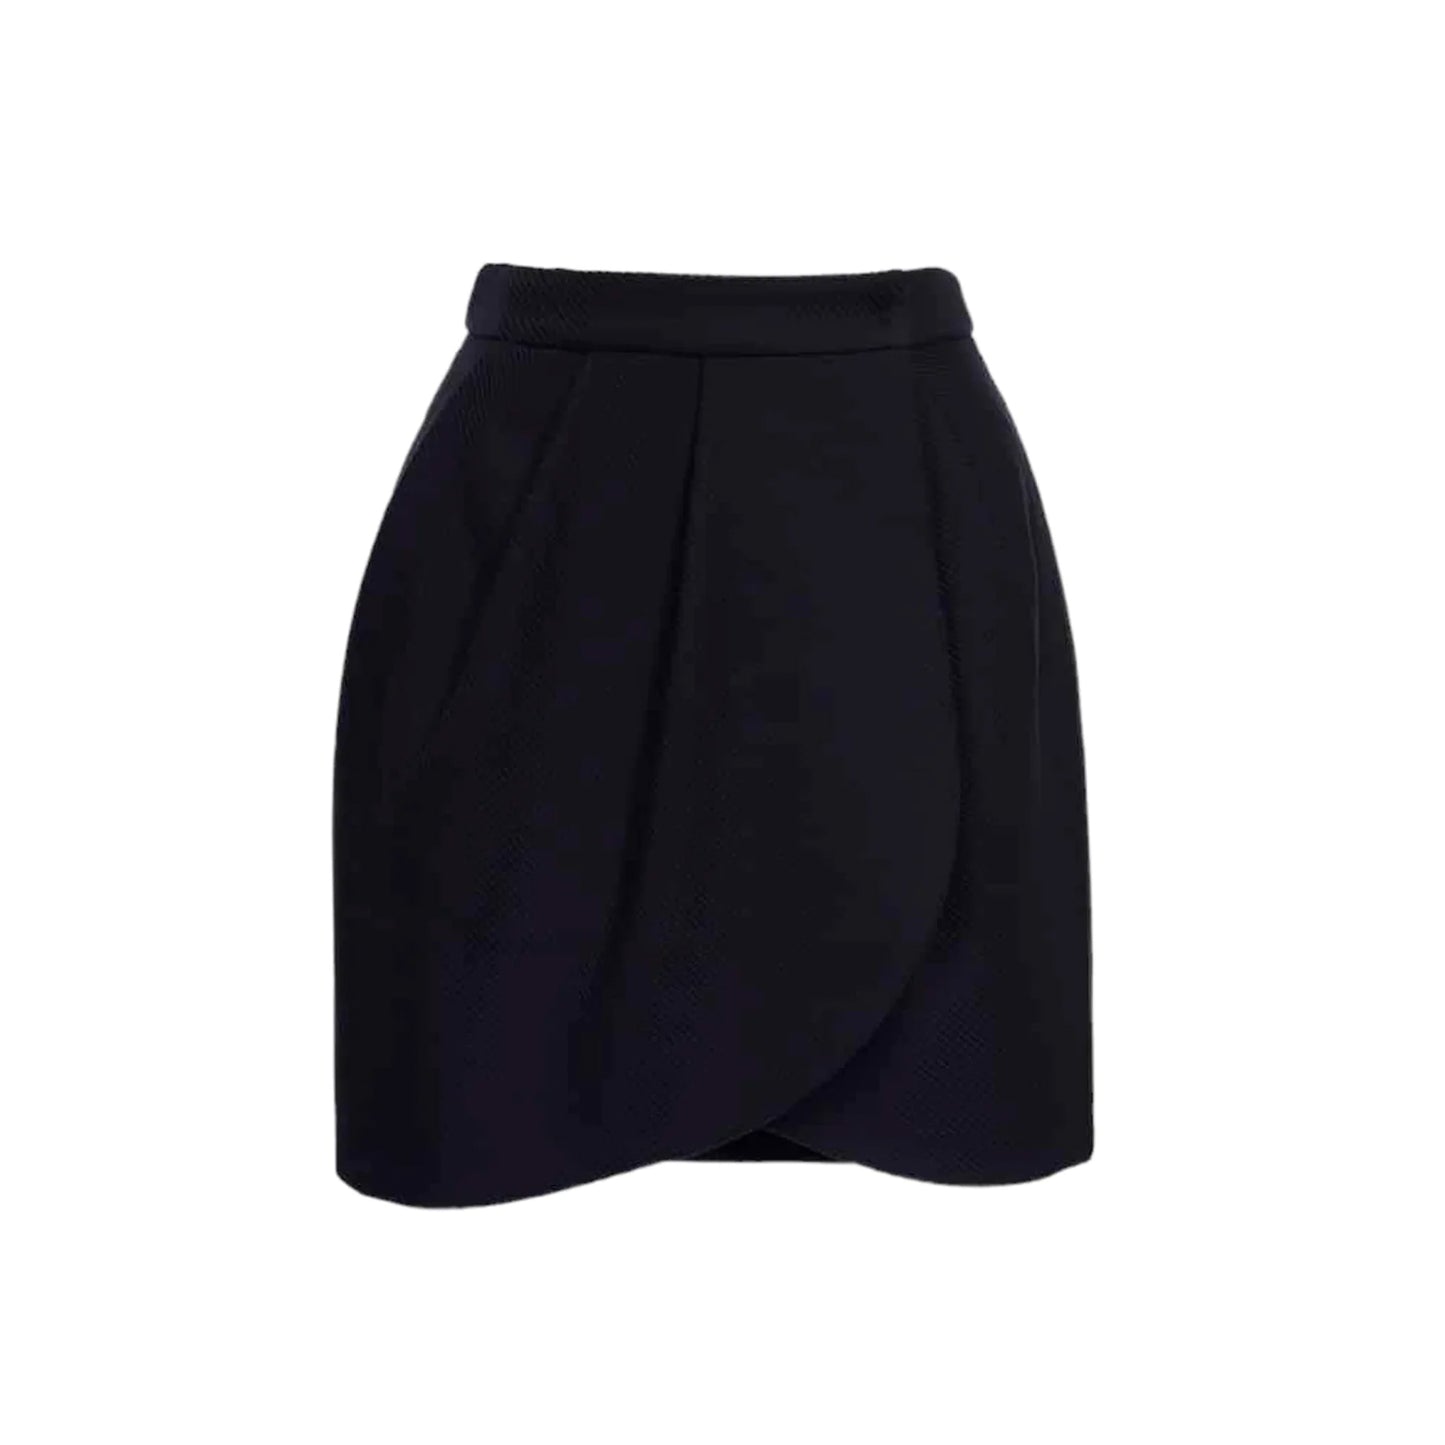 Essentiel Antwerp Black Mini Skirt - NWT